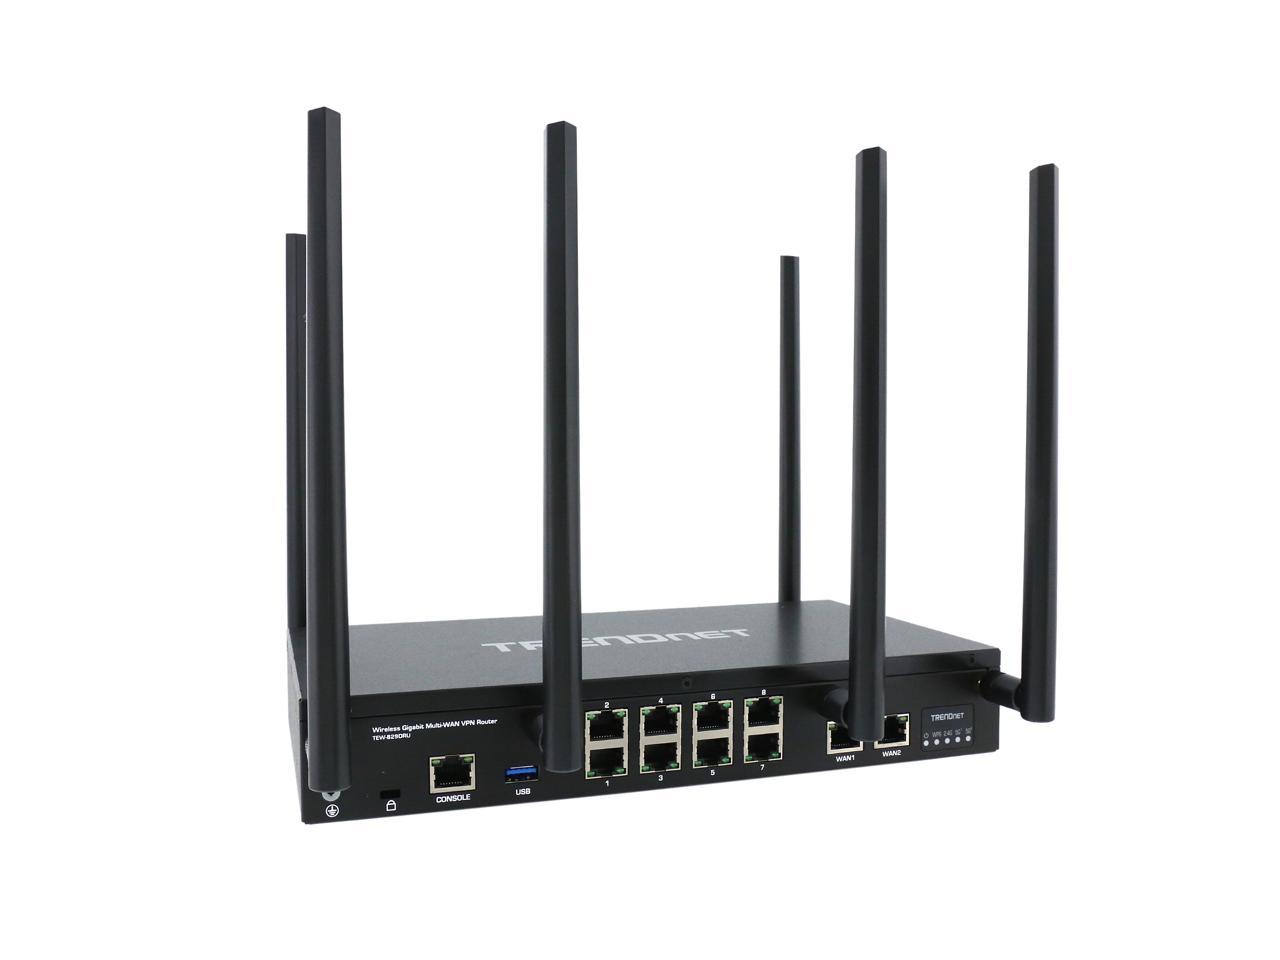 black Wave 2,Internet Router,Whole Office/Home wifi,Pre-Encryped Wireless,QoS,Inter-VLAN routing TRENDnet AC3000 Tri-Band Wireless Gigabit Dual-WAN VPN SMB Router,TEW-829DRU,MU-MIMO 